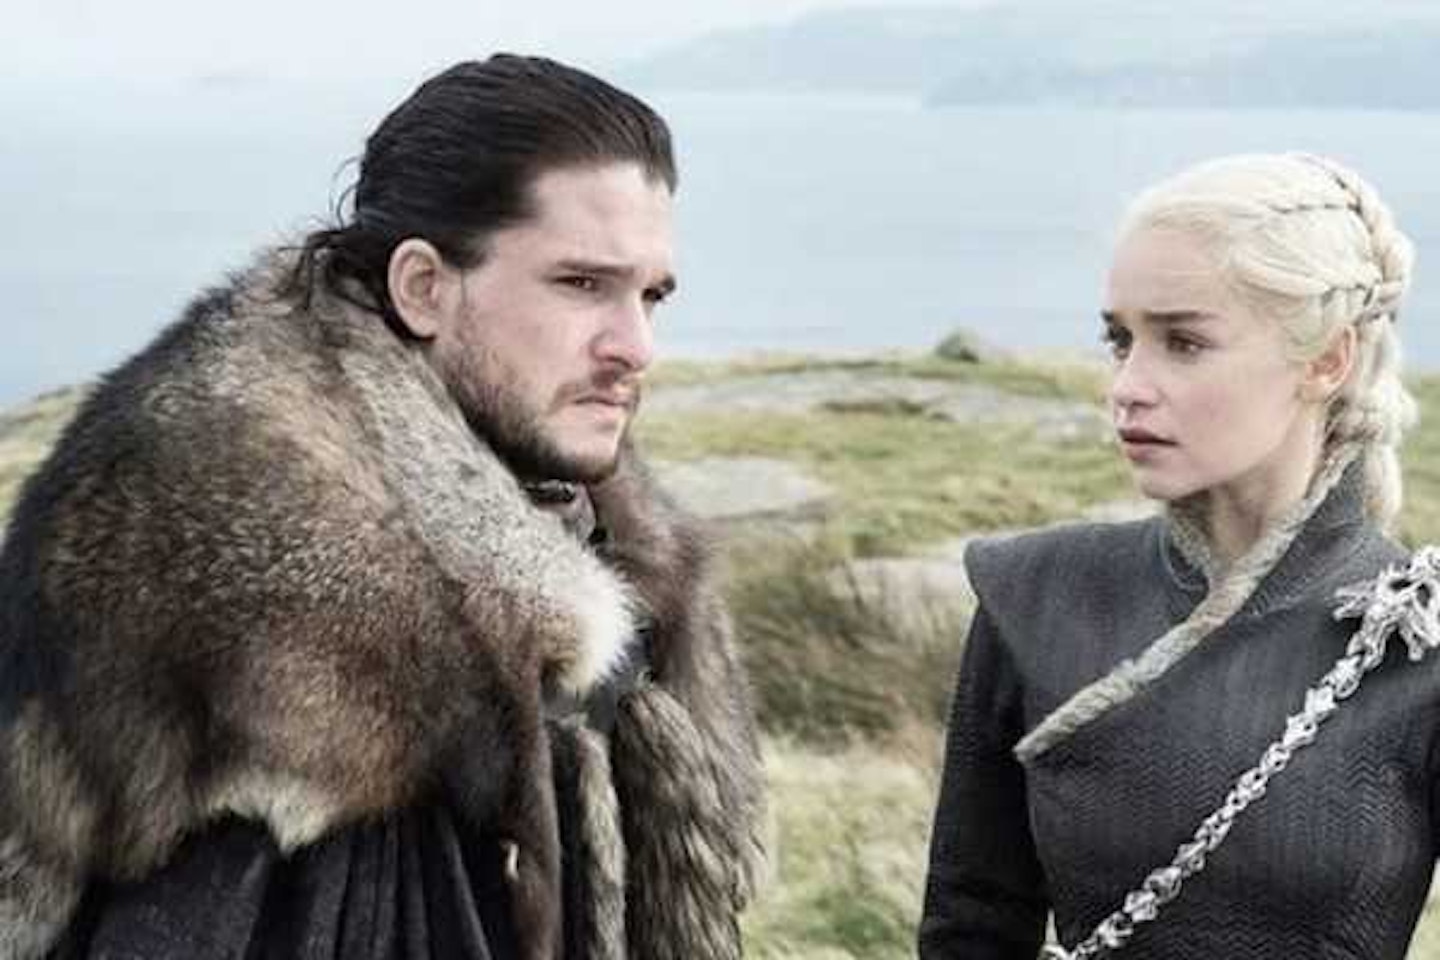 Kit Harington as Jon Snow and Emilia Clarke as Daenerys Targaryen